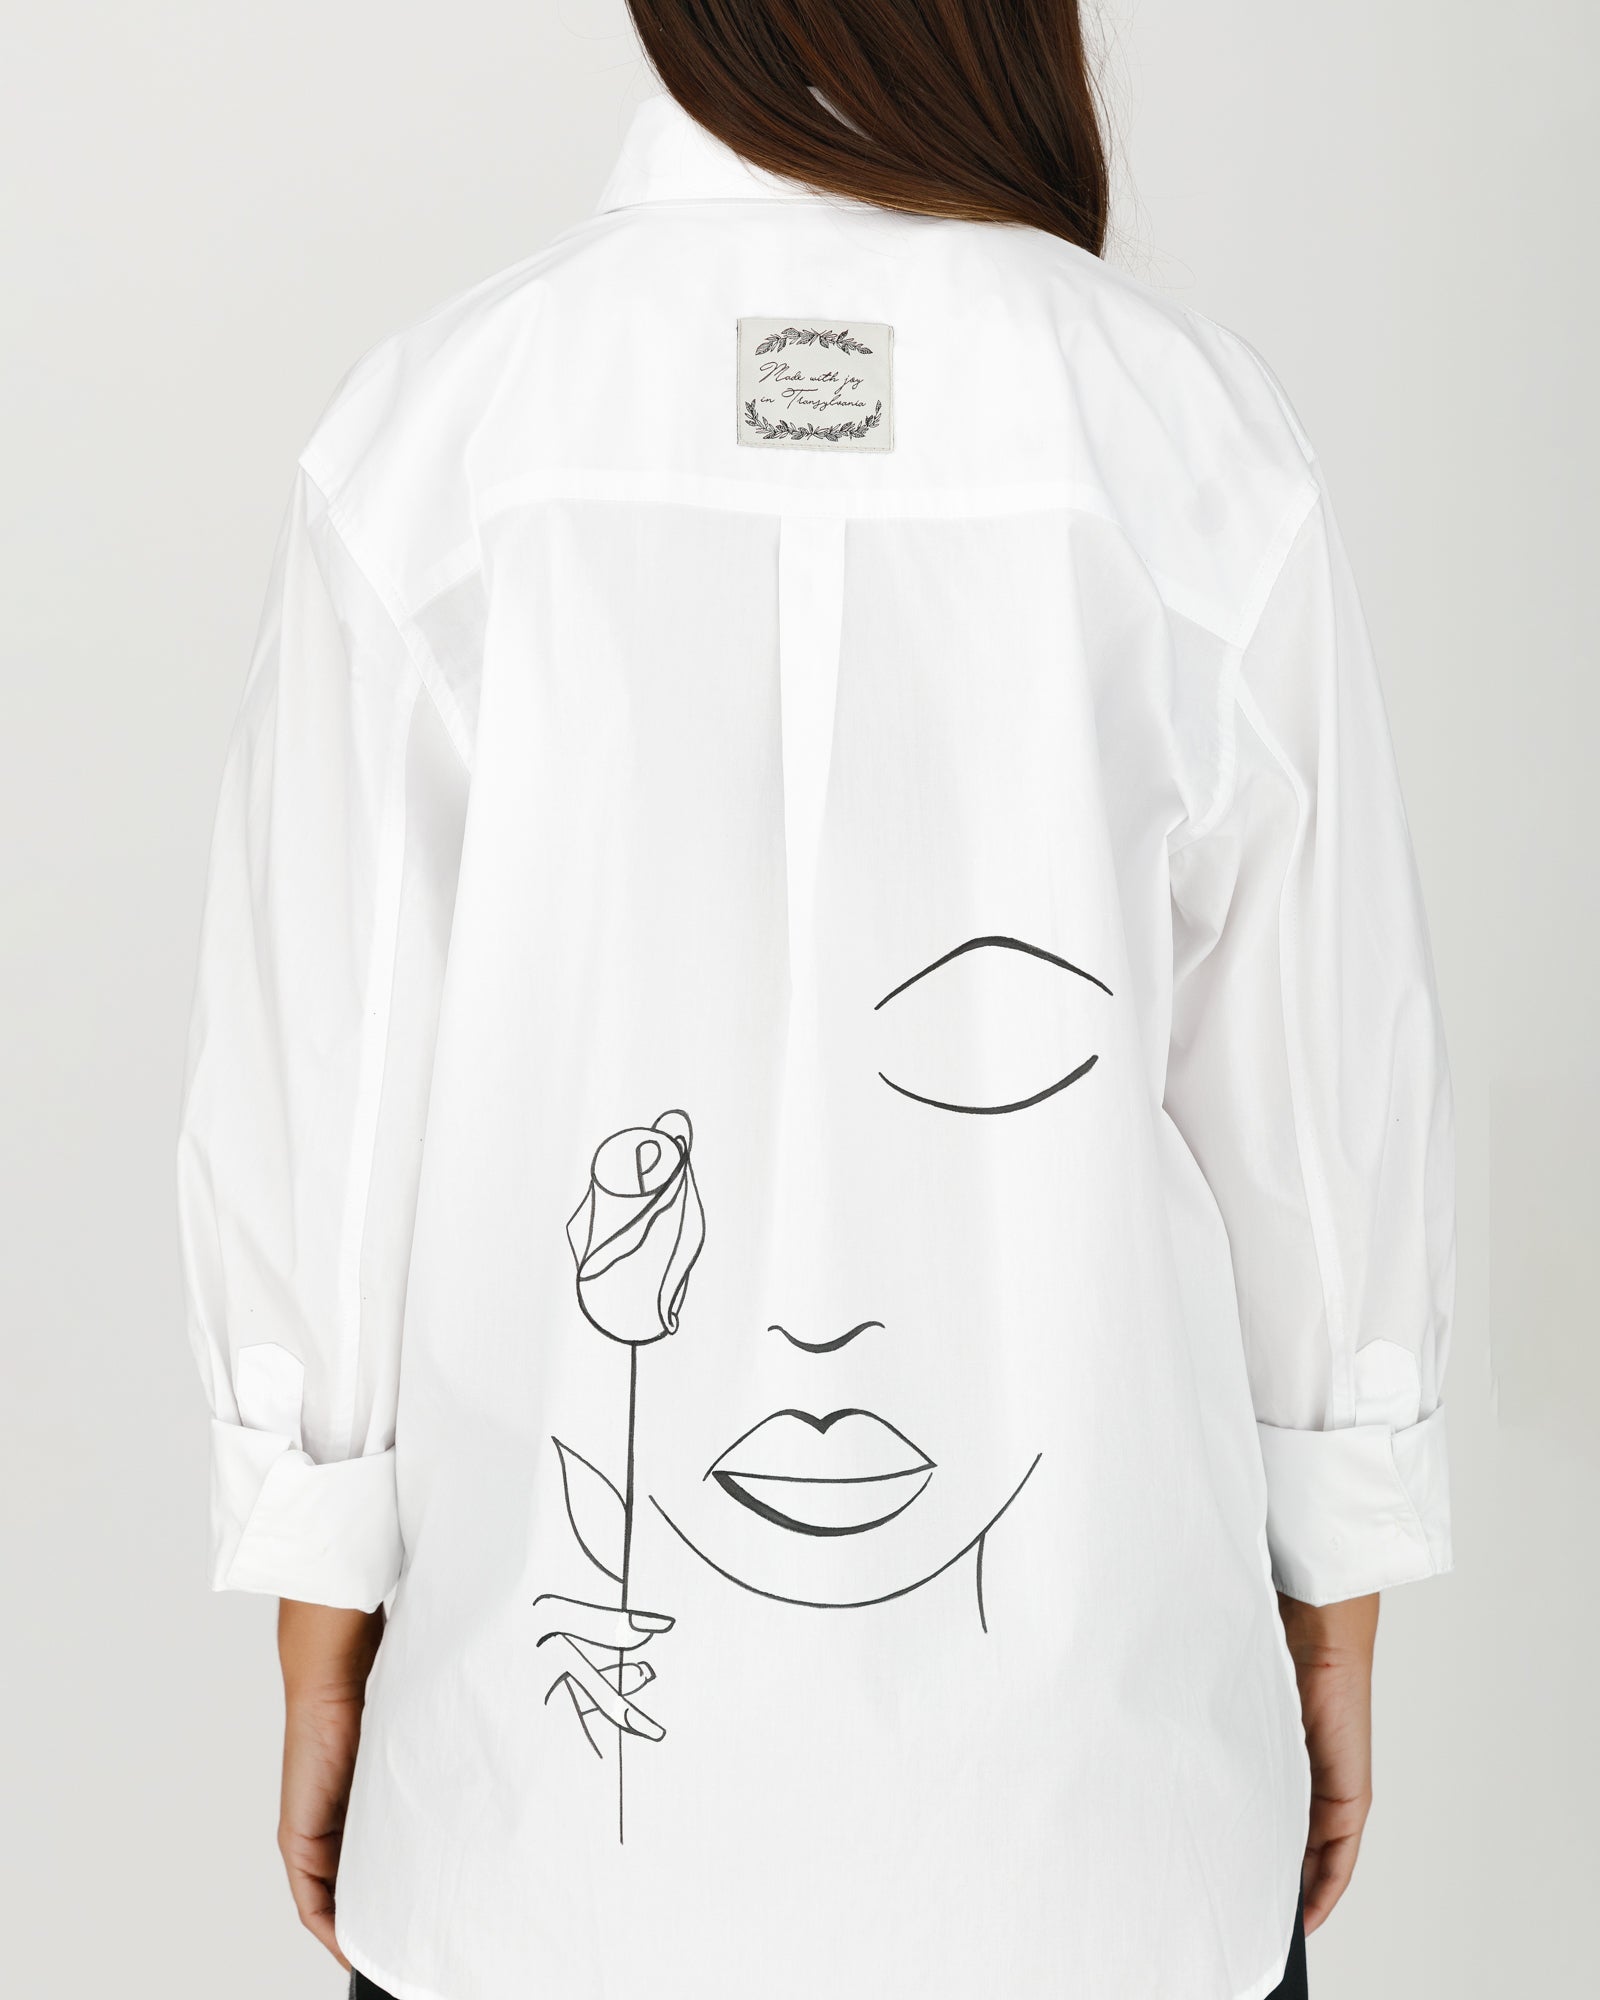 "Tenderness" minimalist style painted shirt